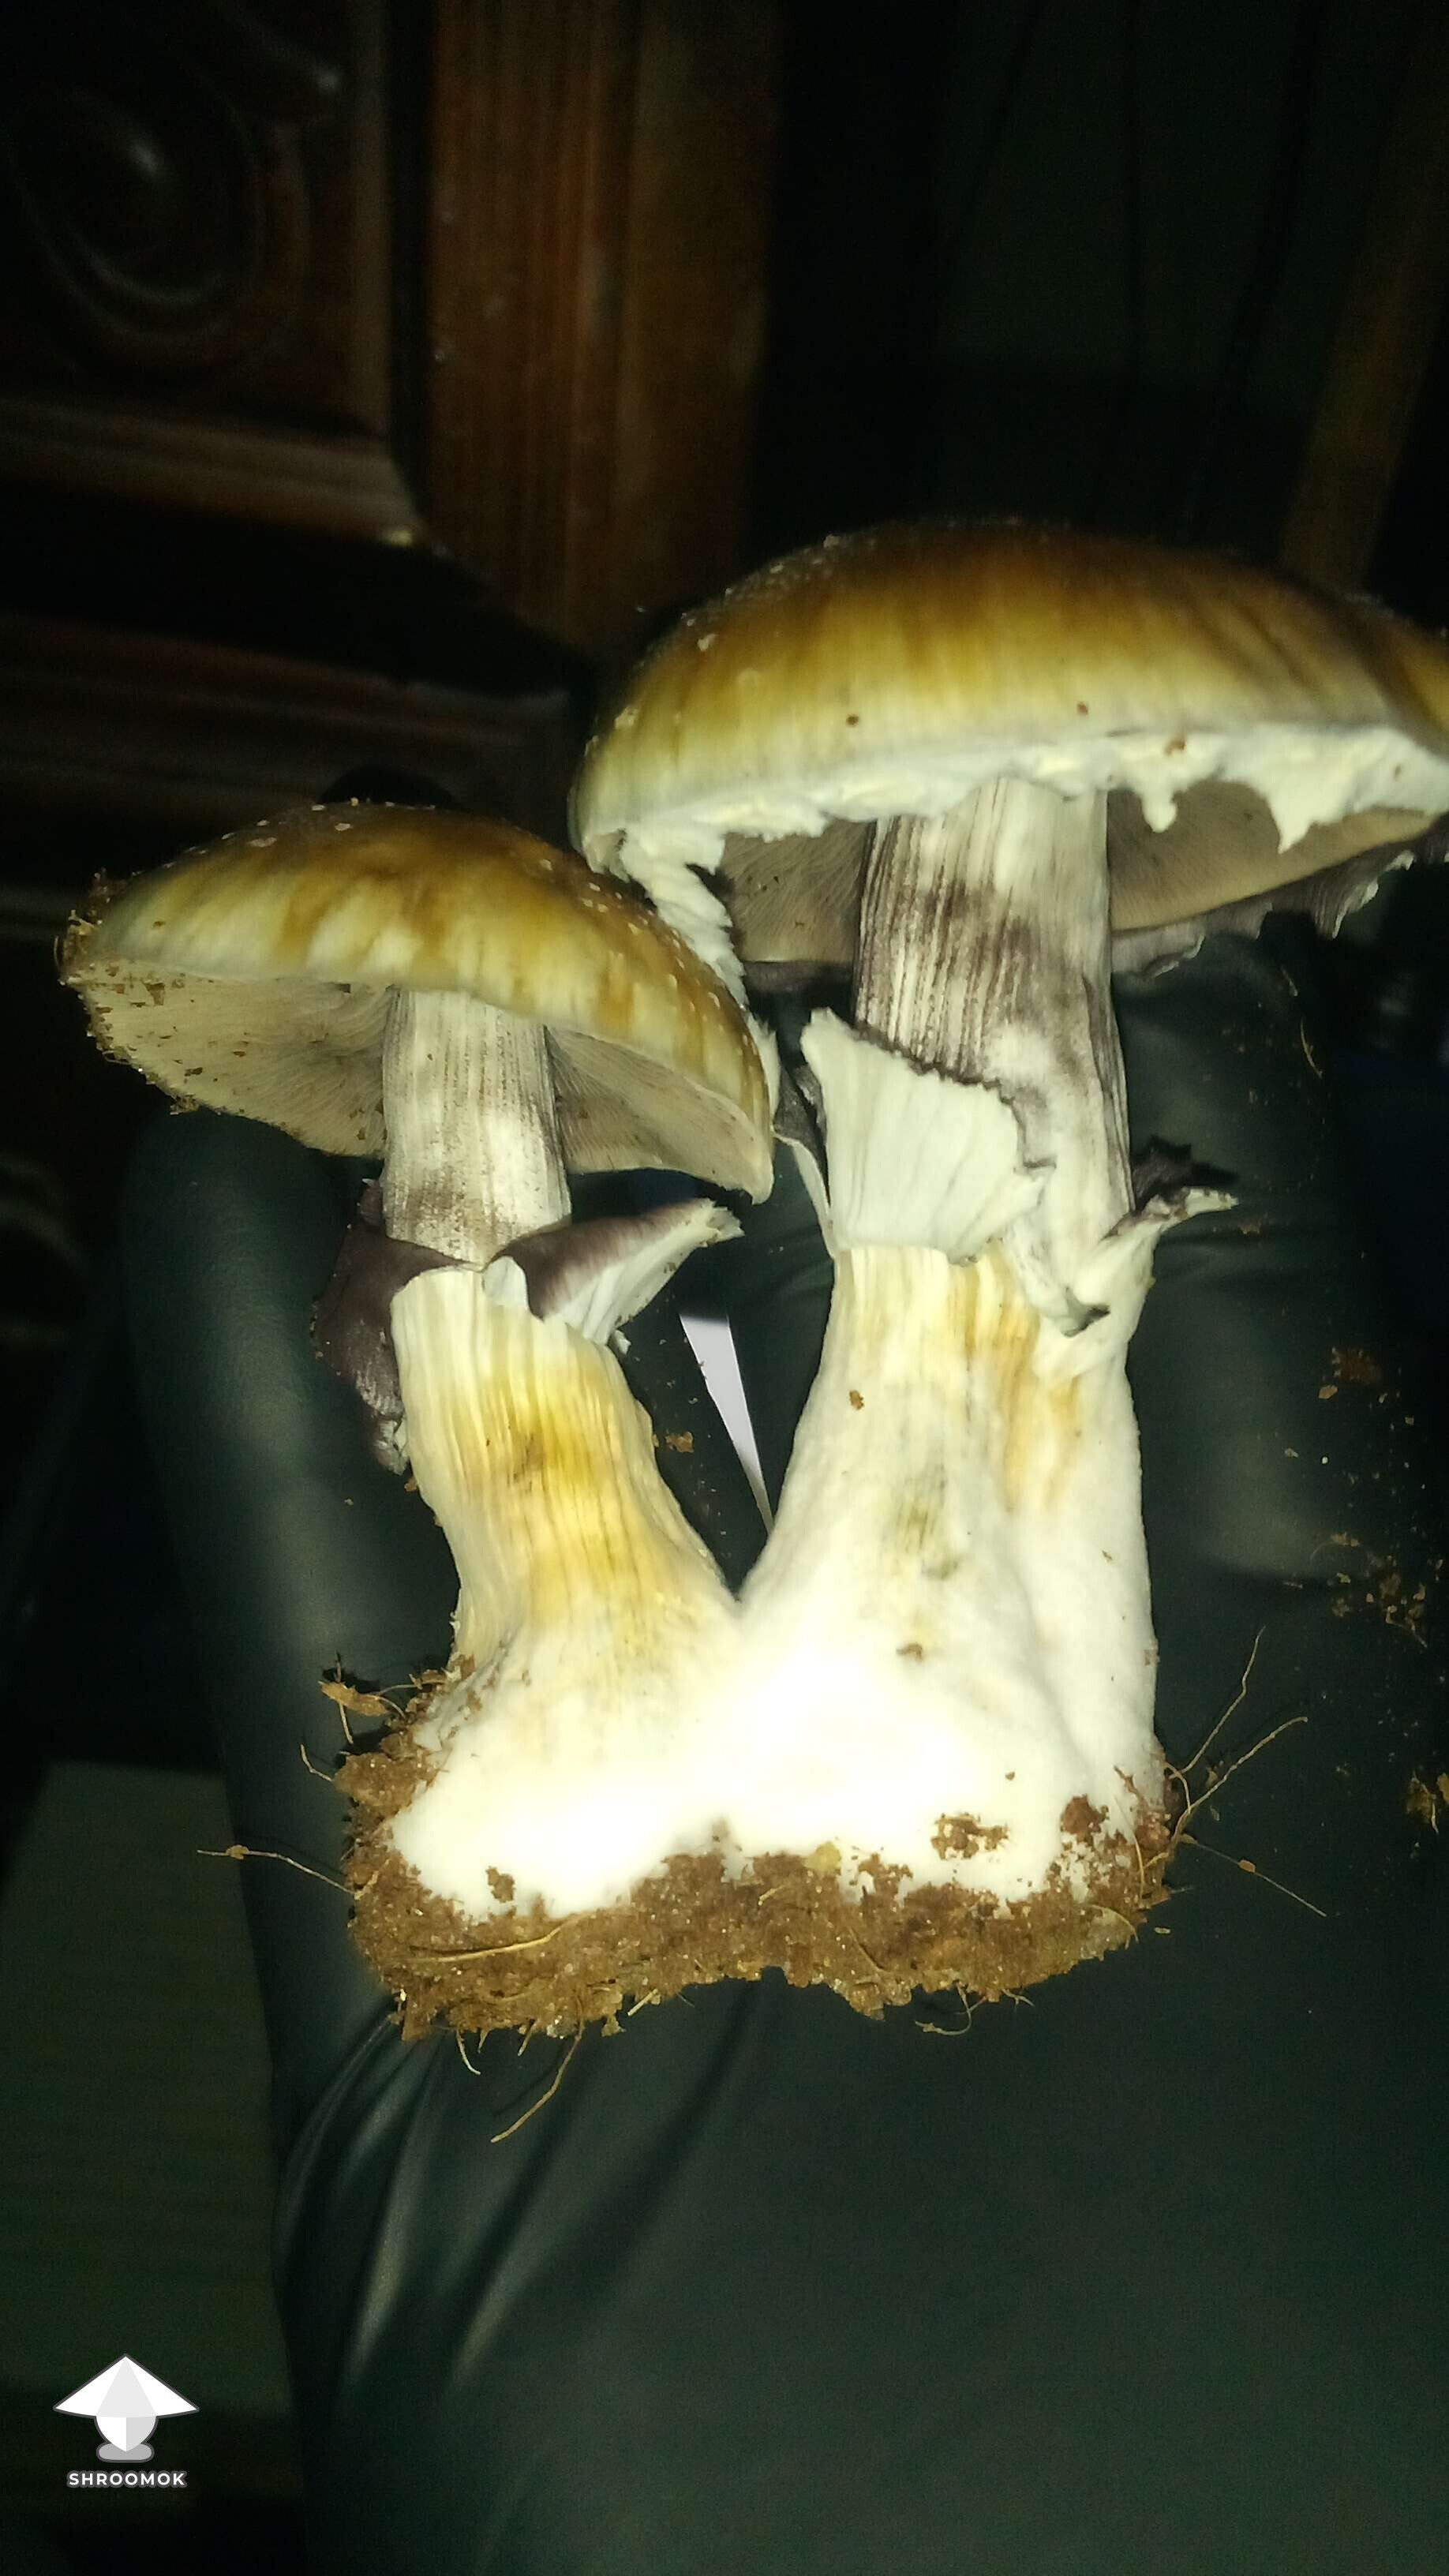 Cubensis Puerto Rican magic mushrooms